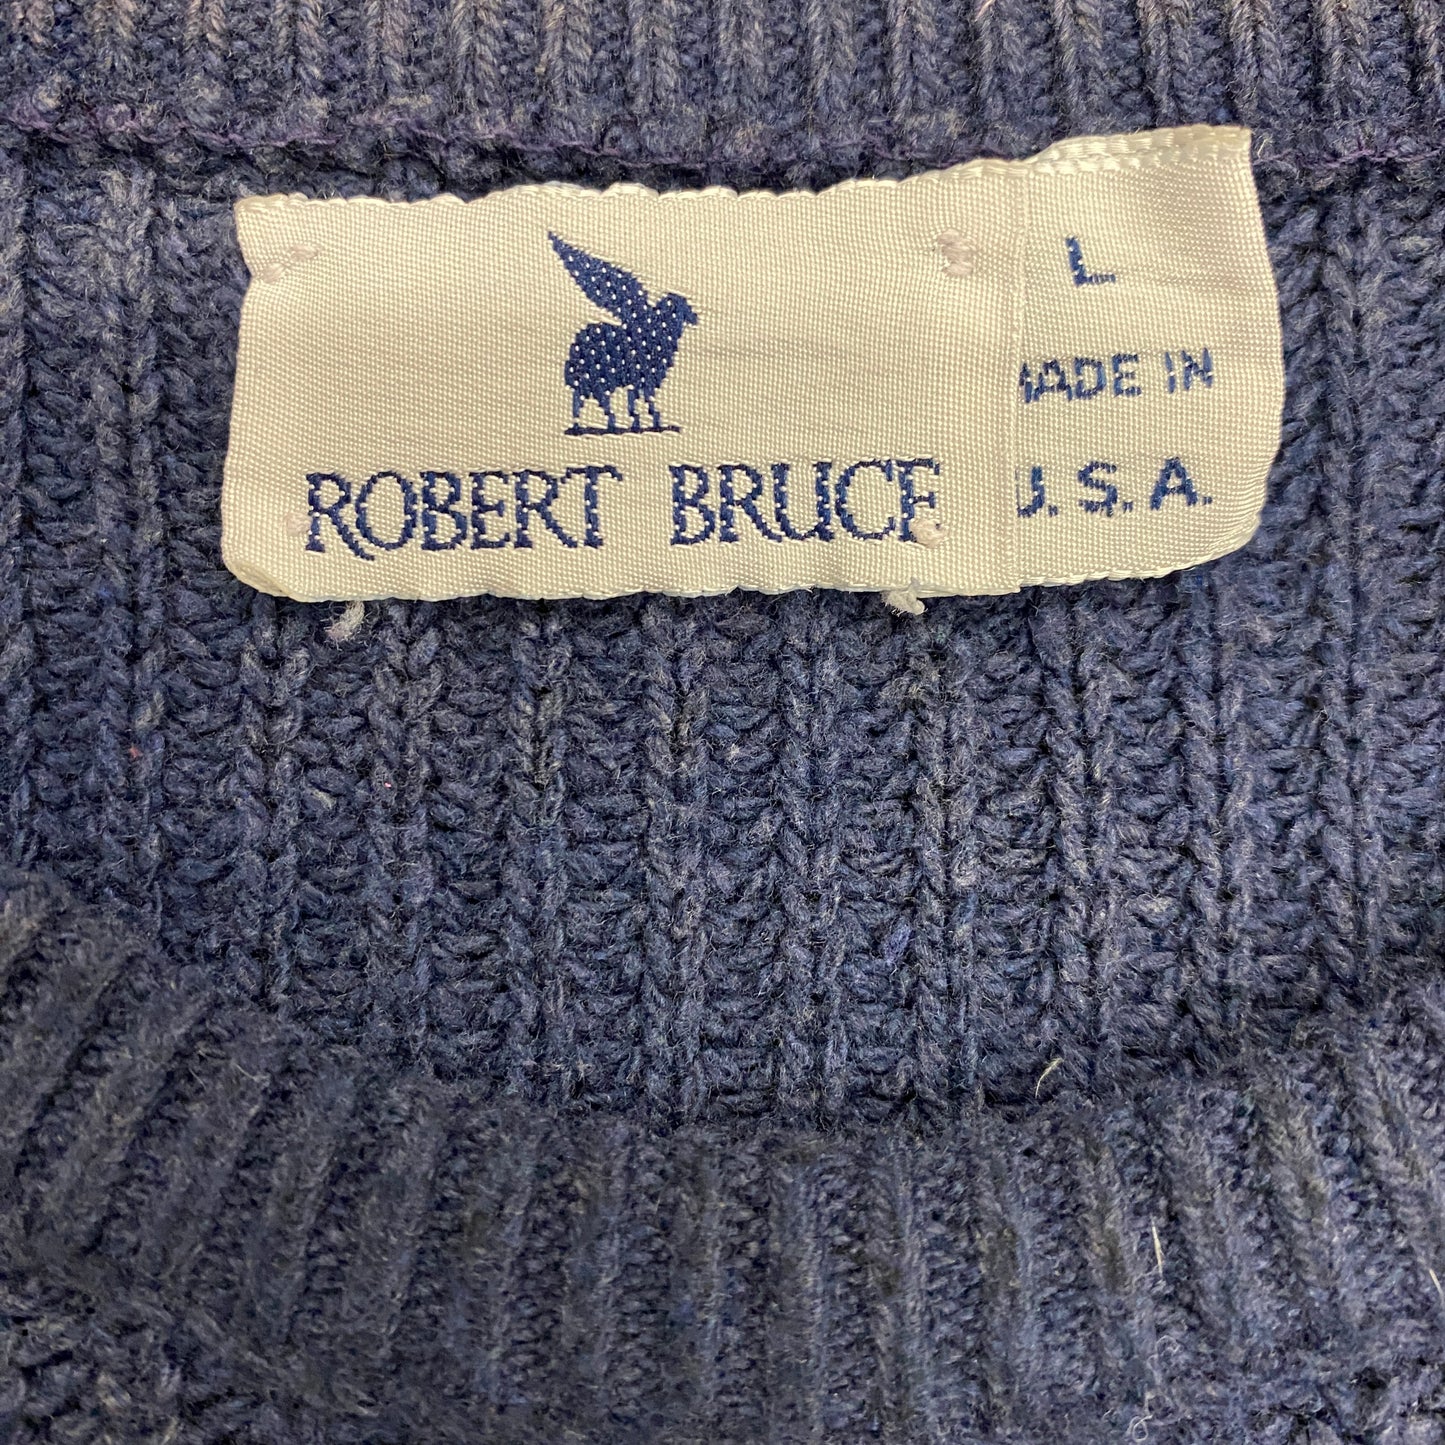 Vintage 1980s Robert Bruce Navy Blue Knit Sweater - Size Large  my